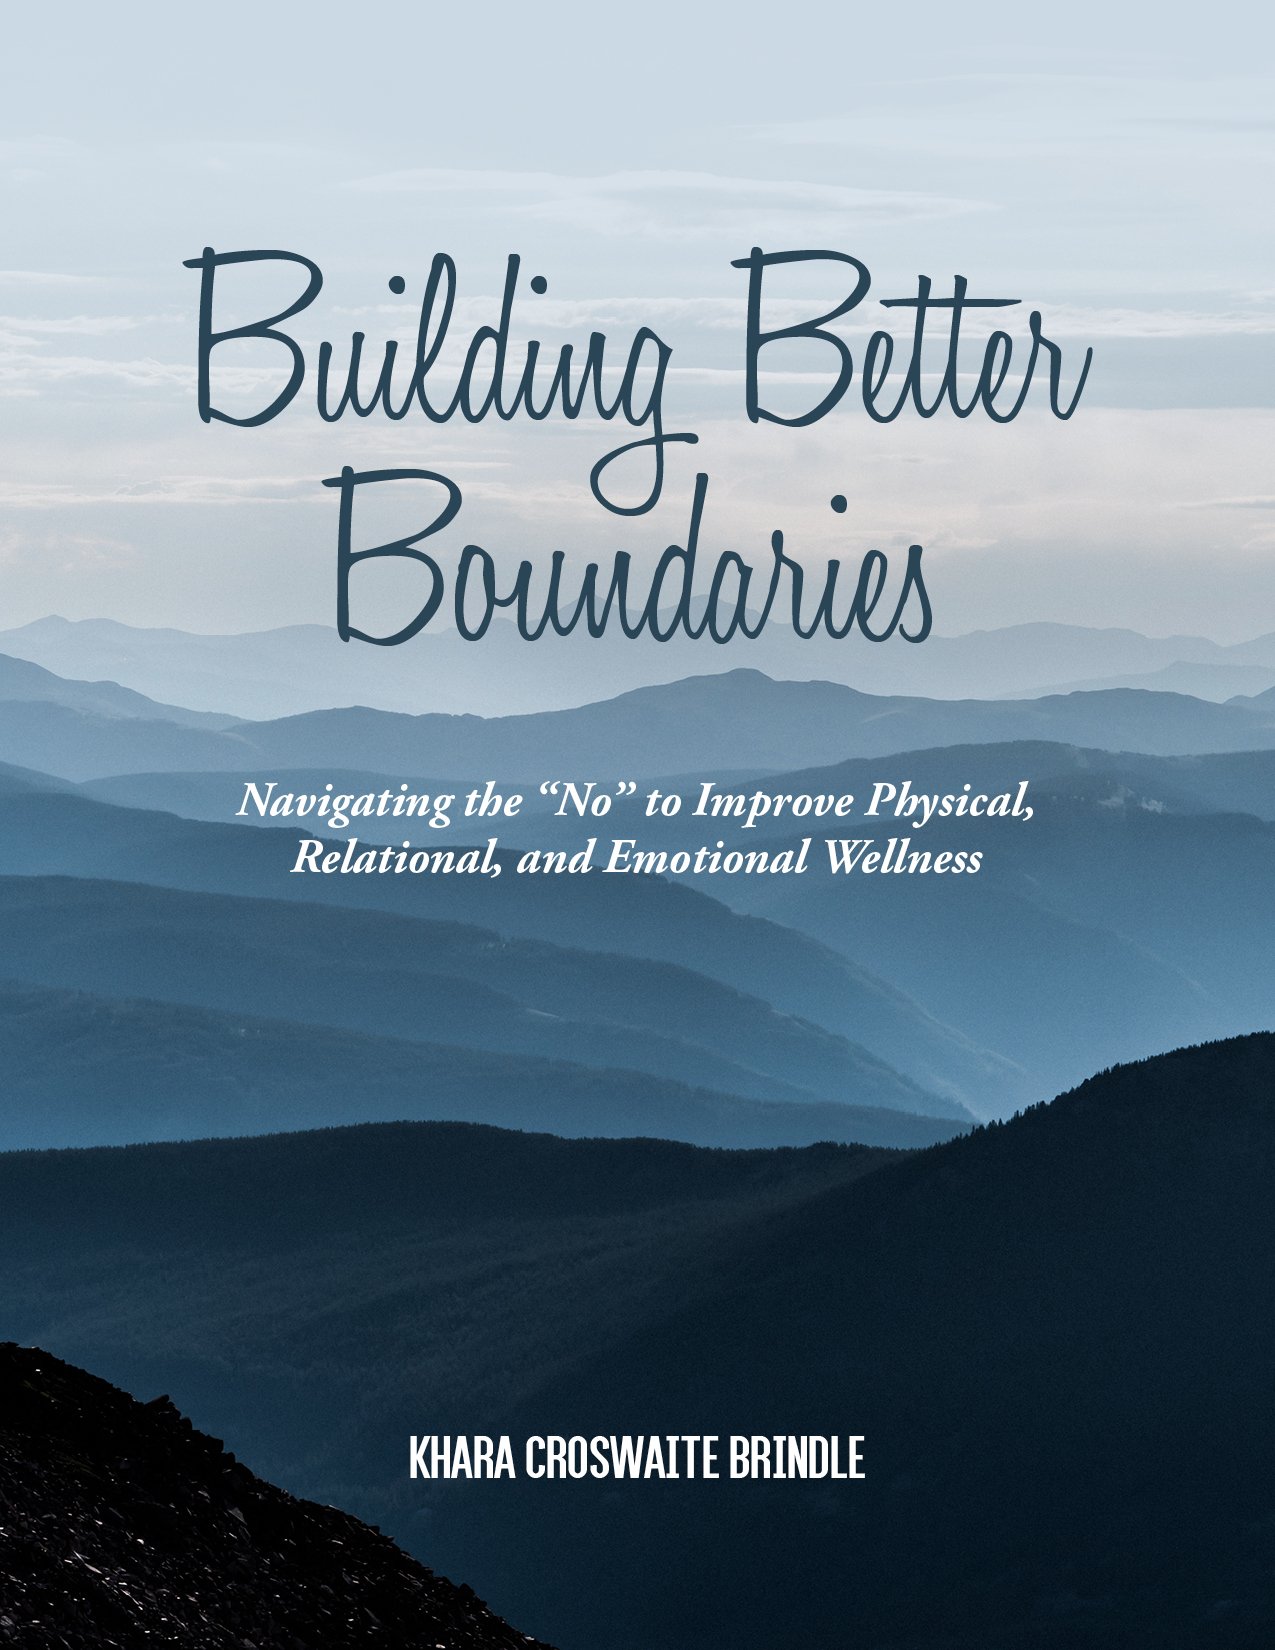 Building Better Boundaries Ebook_Cover.jpg